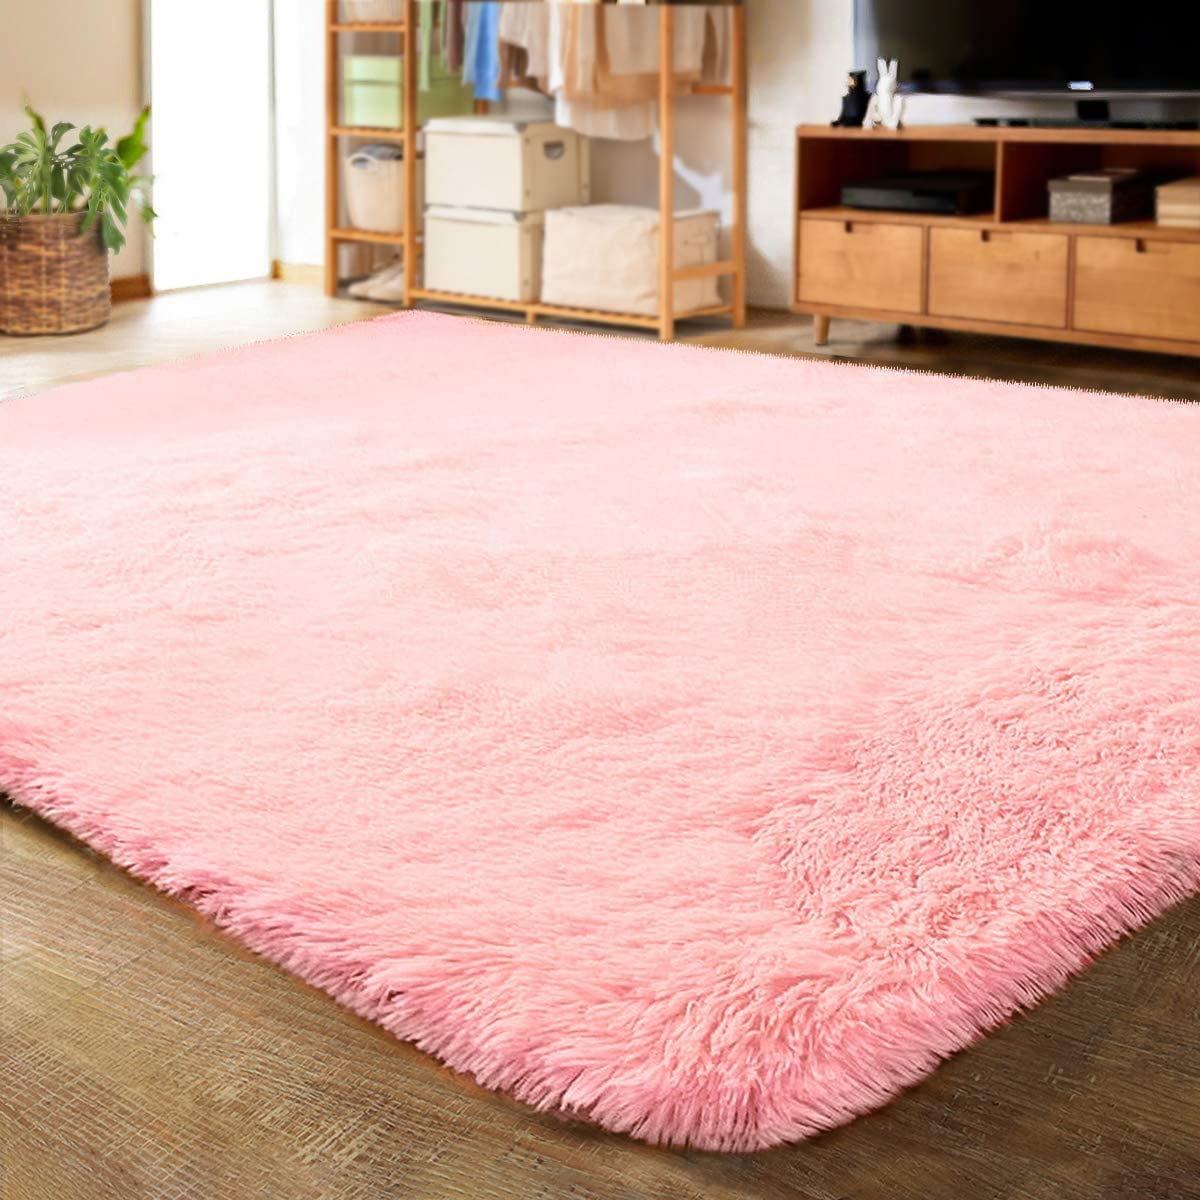 Area Rug Mat Pad Pink 4 x 5 Ft Nursery Kids Room Home Soft Living Room Gift New 